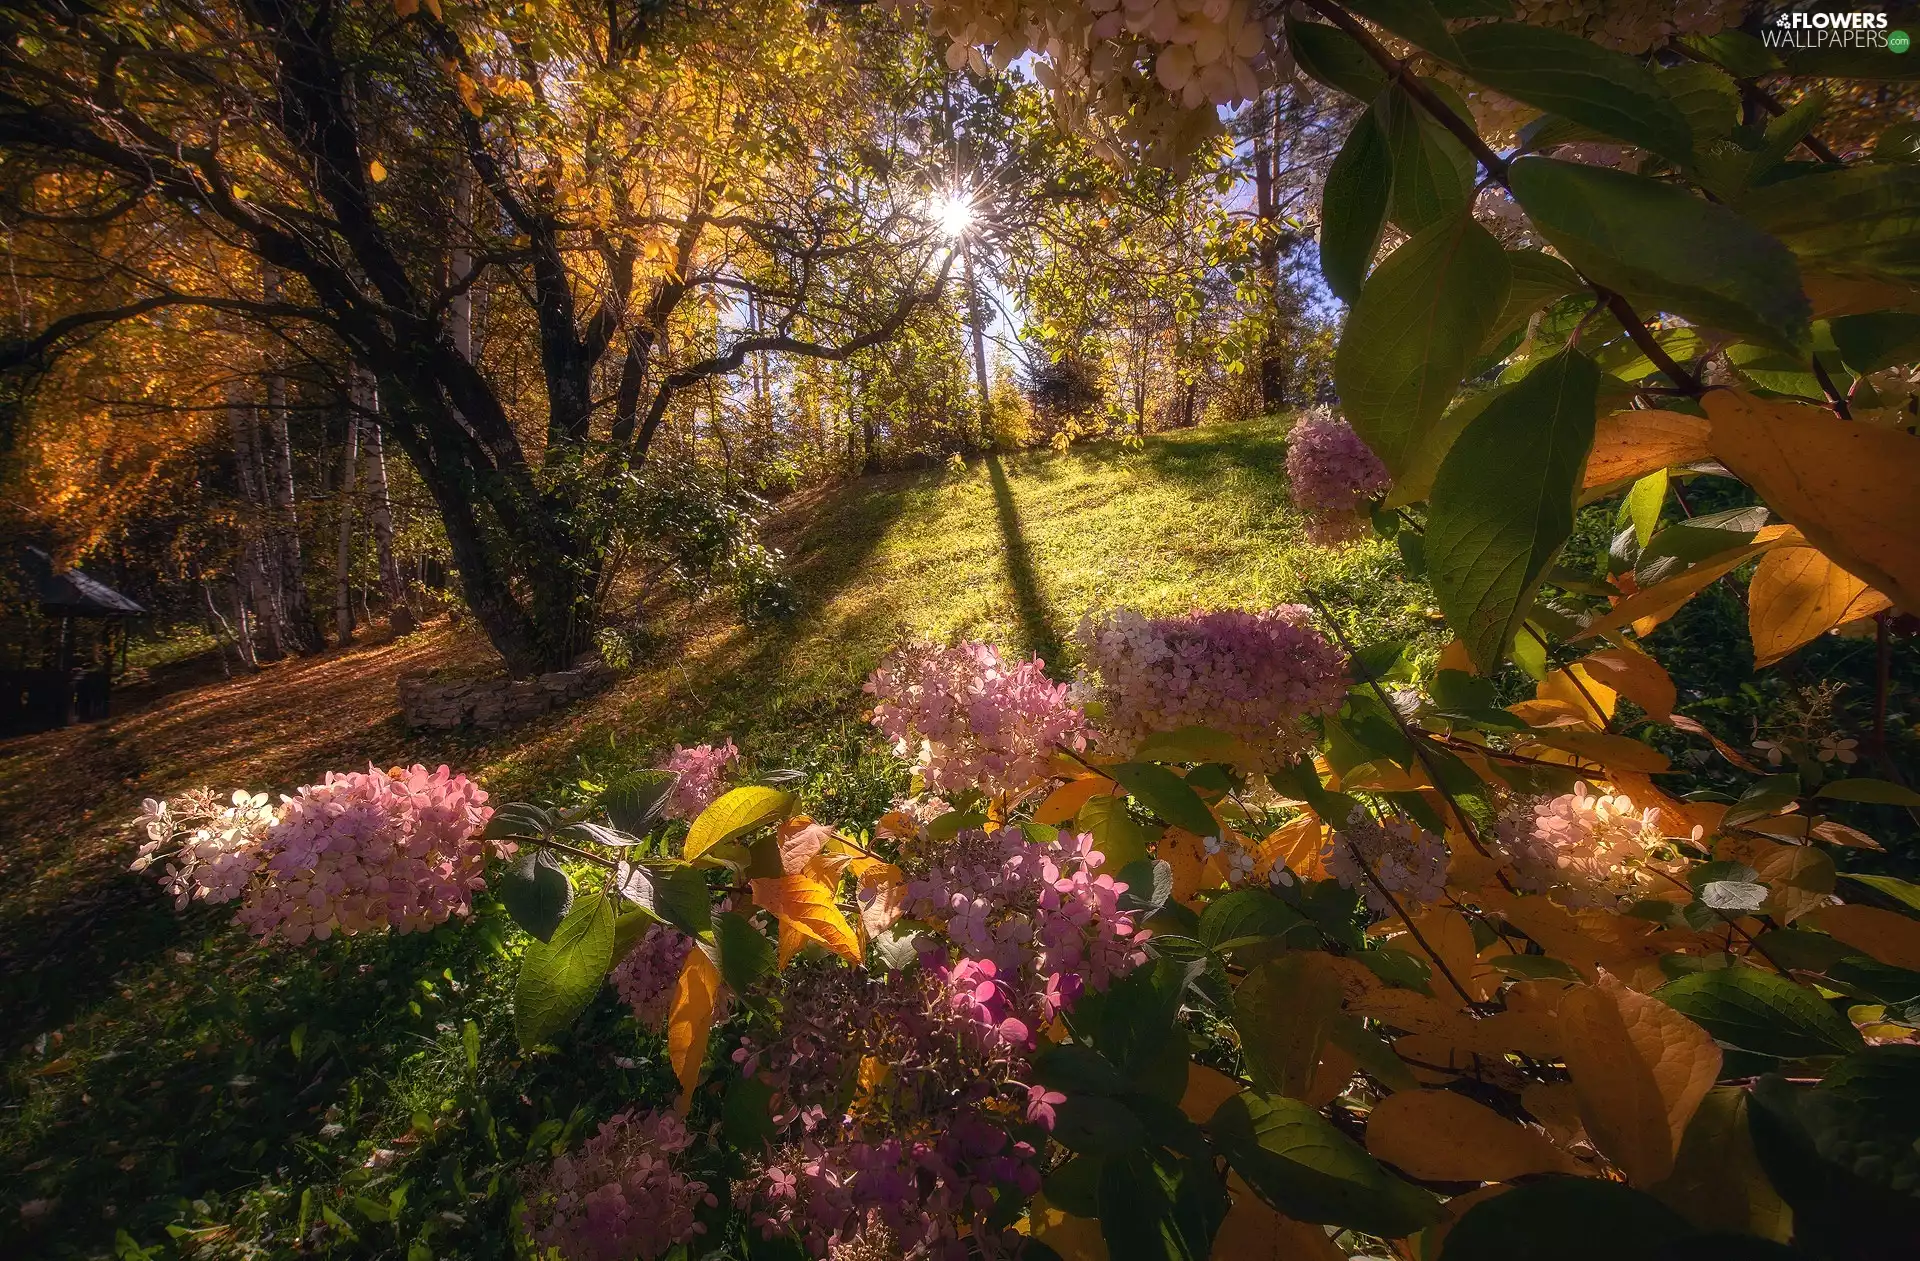 trees, Flowers, autumn, rays of the Sun, viewes, hydrangeas